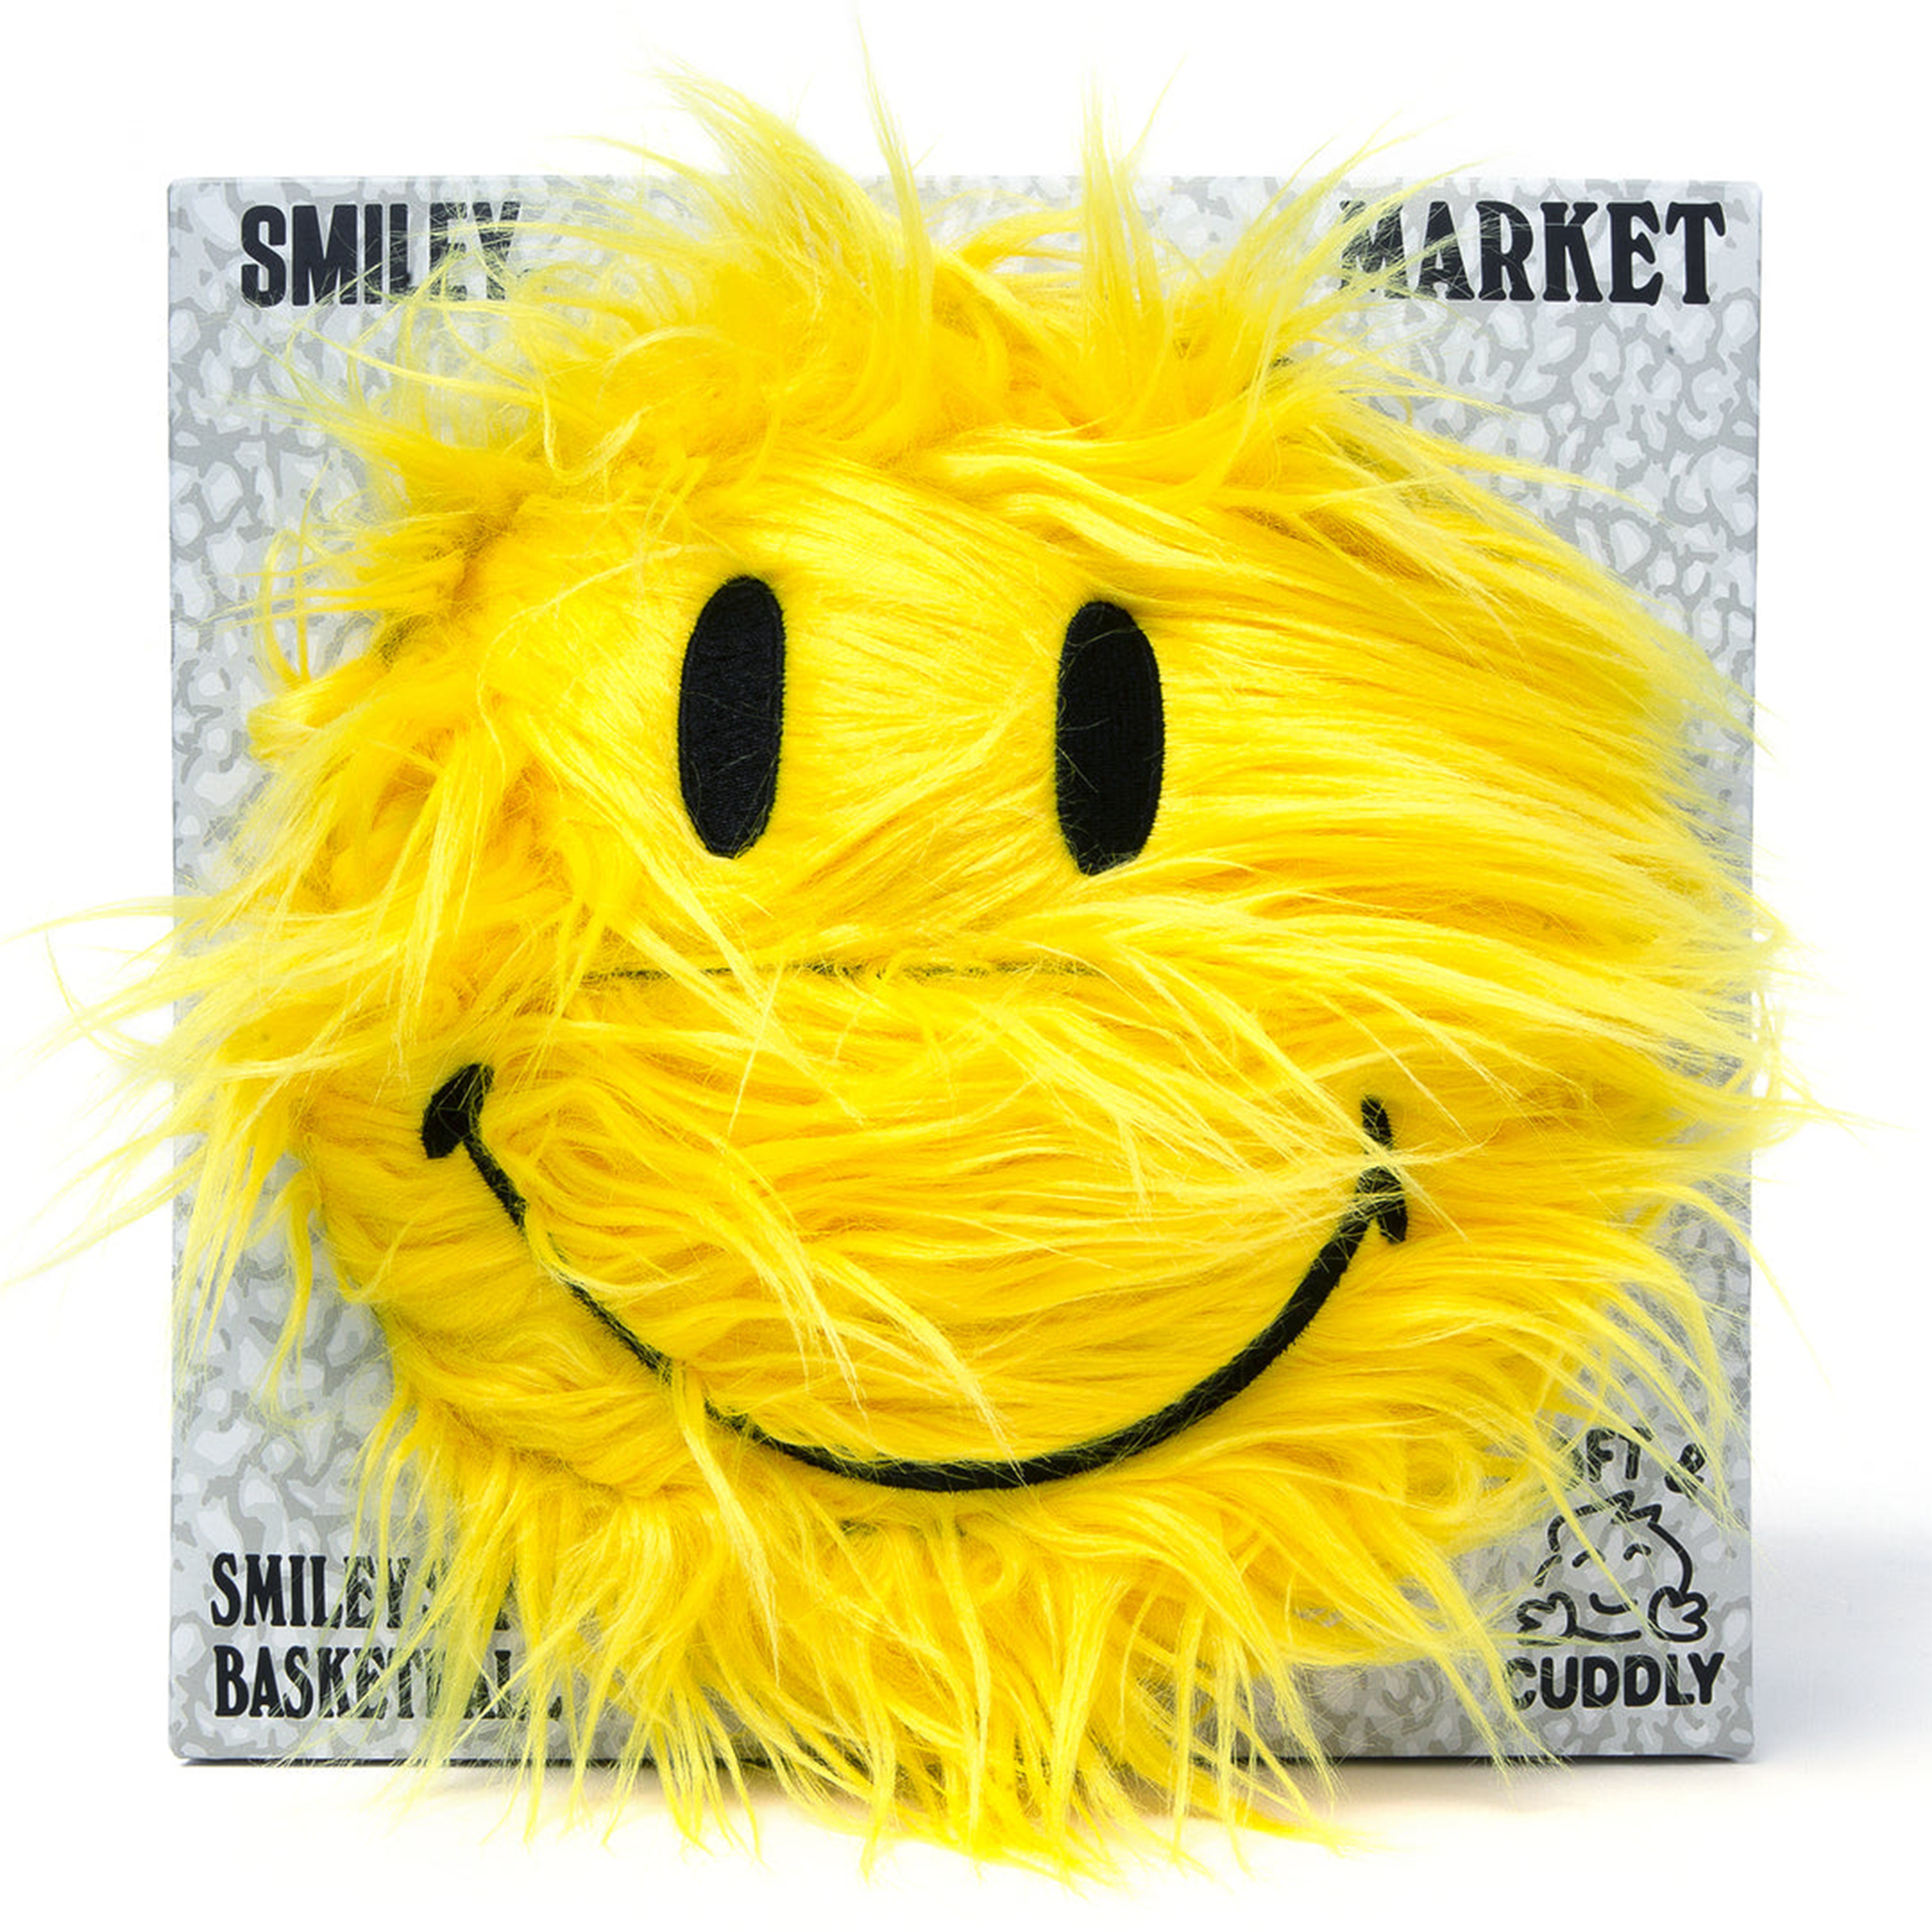 Market "Shaggy" Smiley Basketball